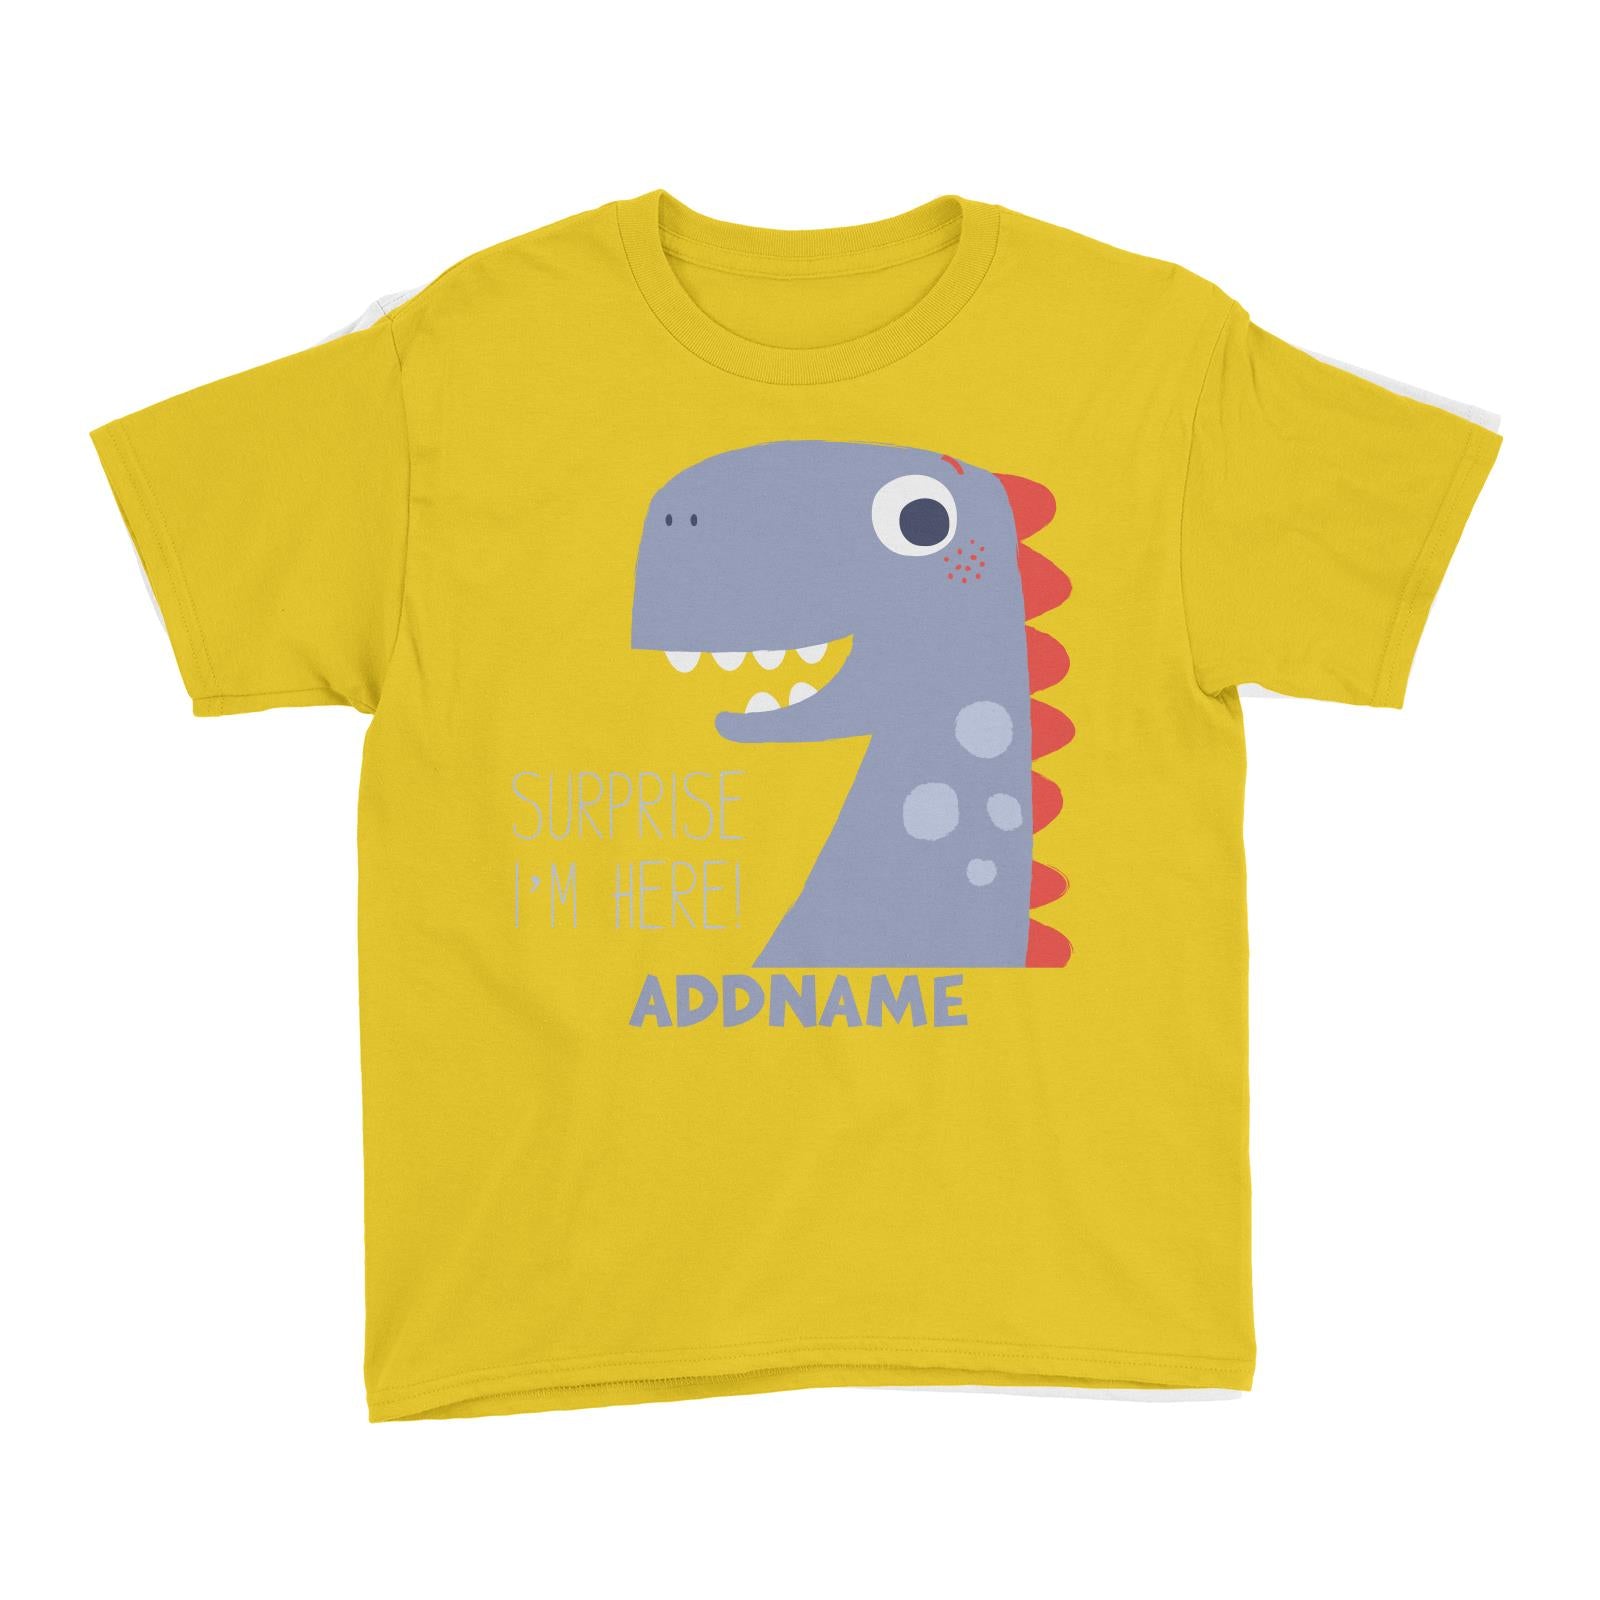 Surprise I'm Here Dinosaur Addname Kid's T-Shirt